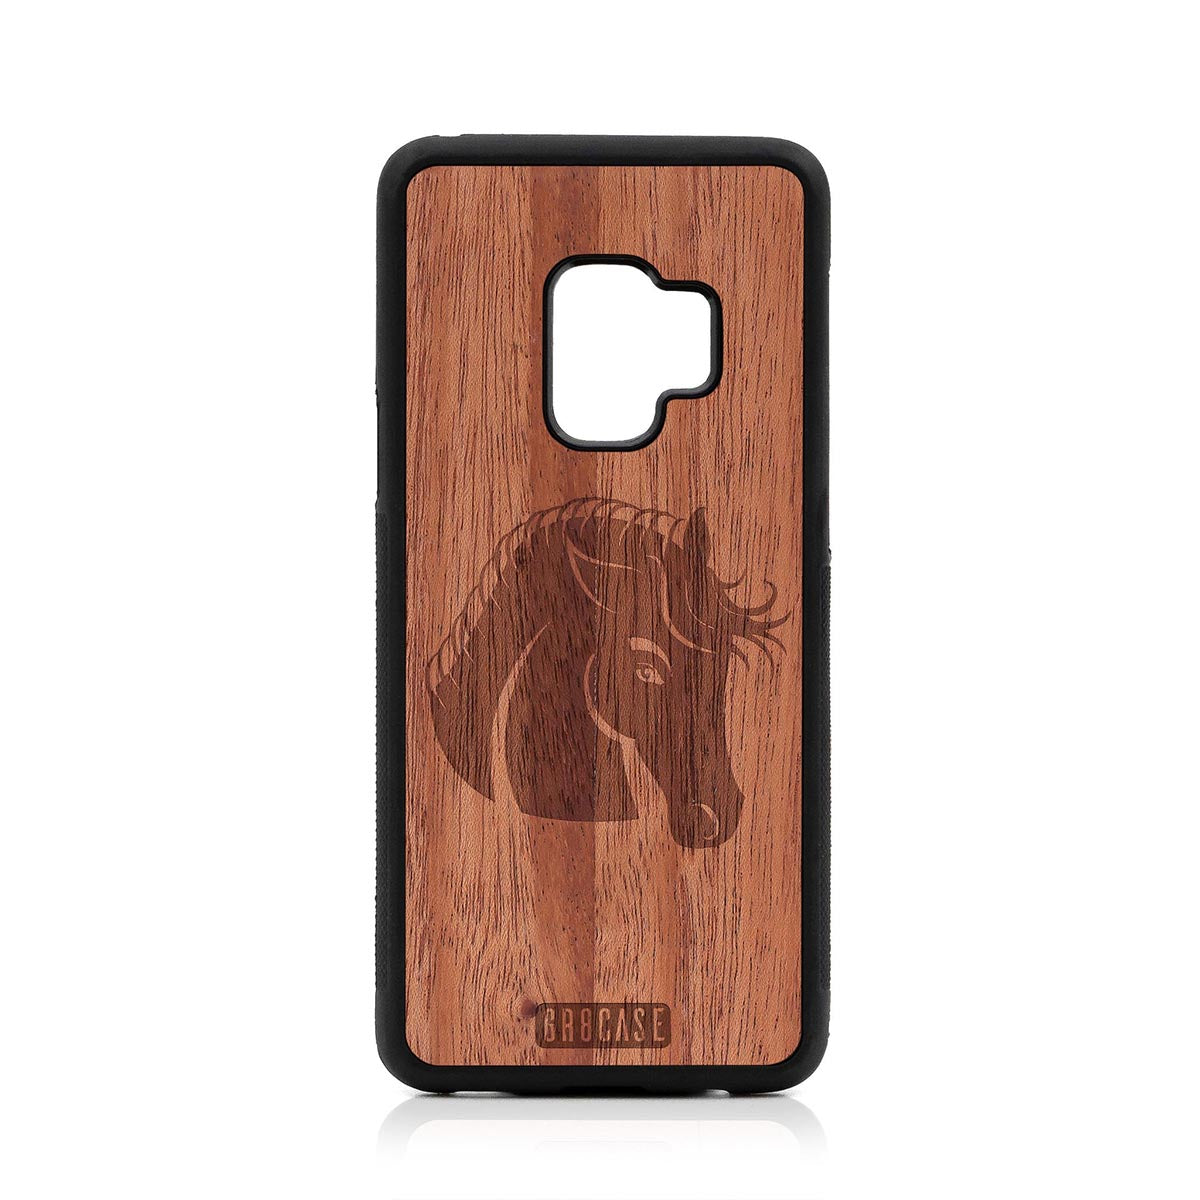 Horse Design Wood Case Samsung Galaxy S9 by GR8CASE